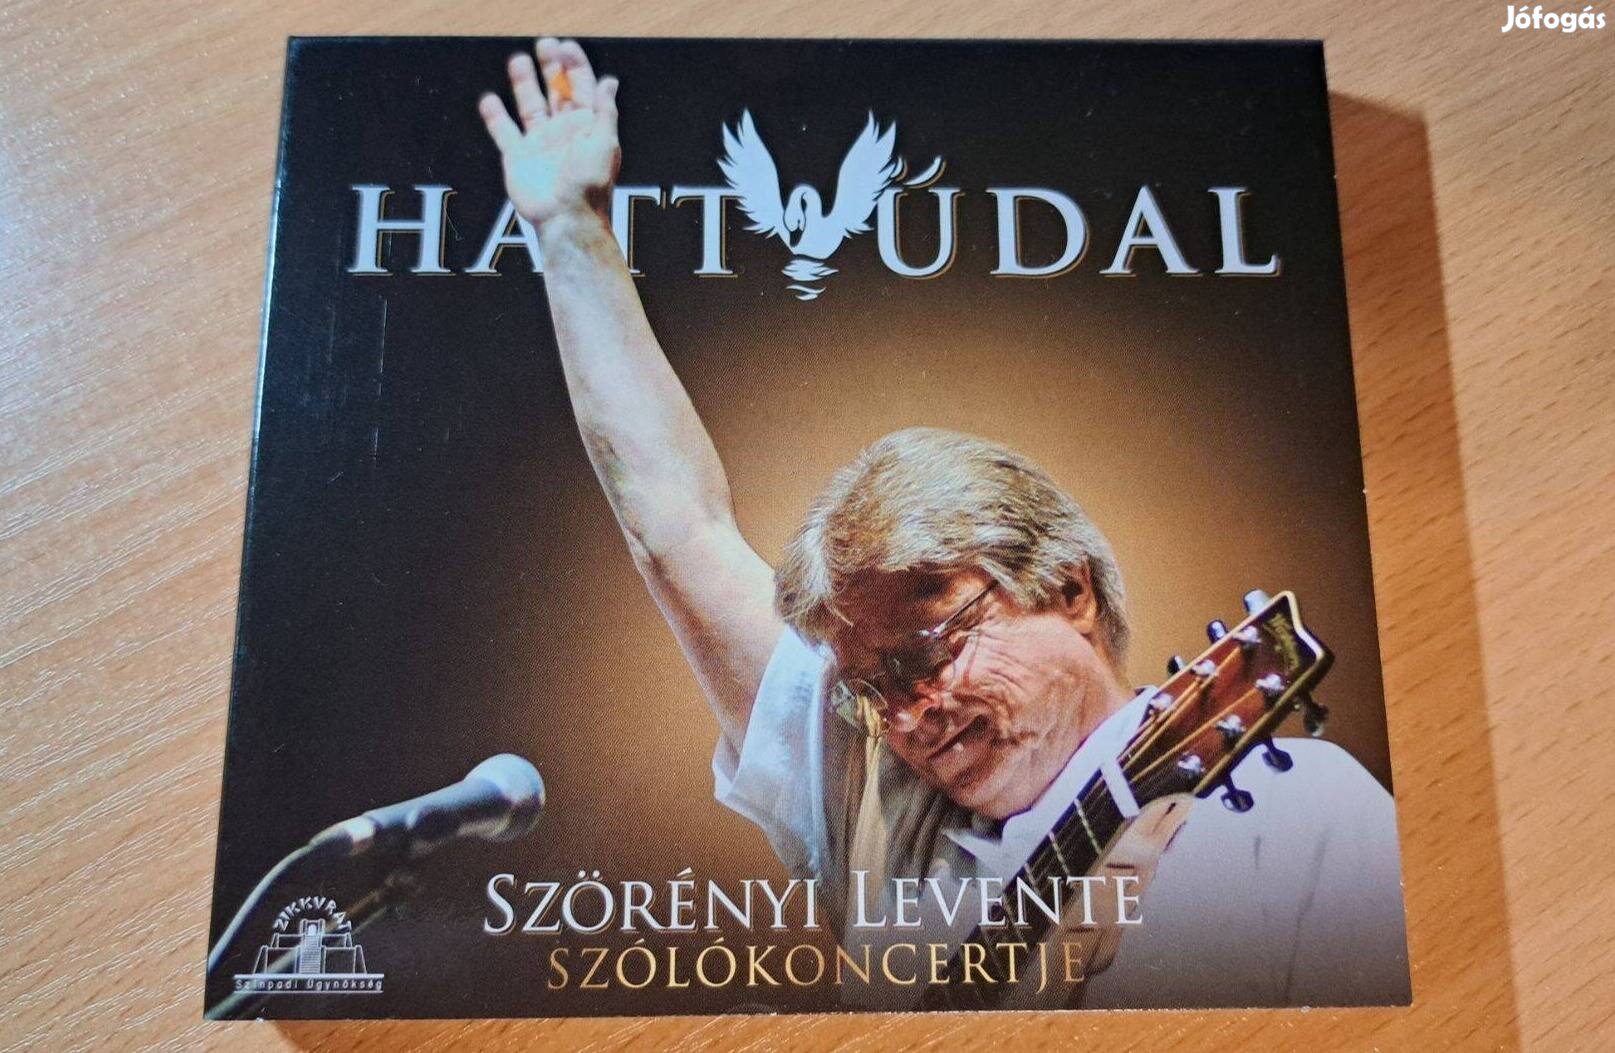 Szörényi Levente - Hattyúdal - dupla CD